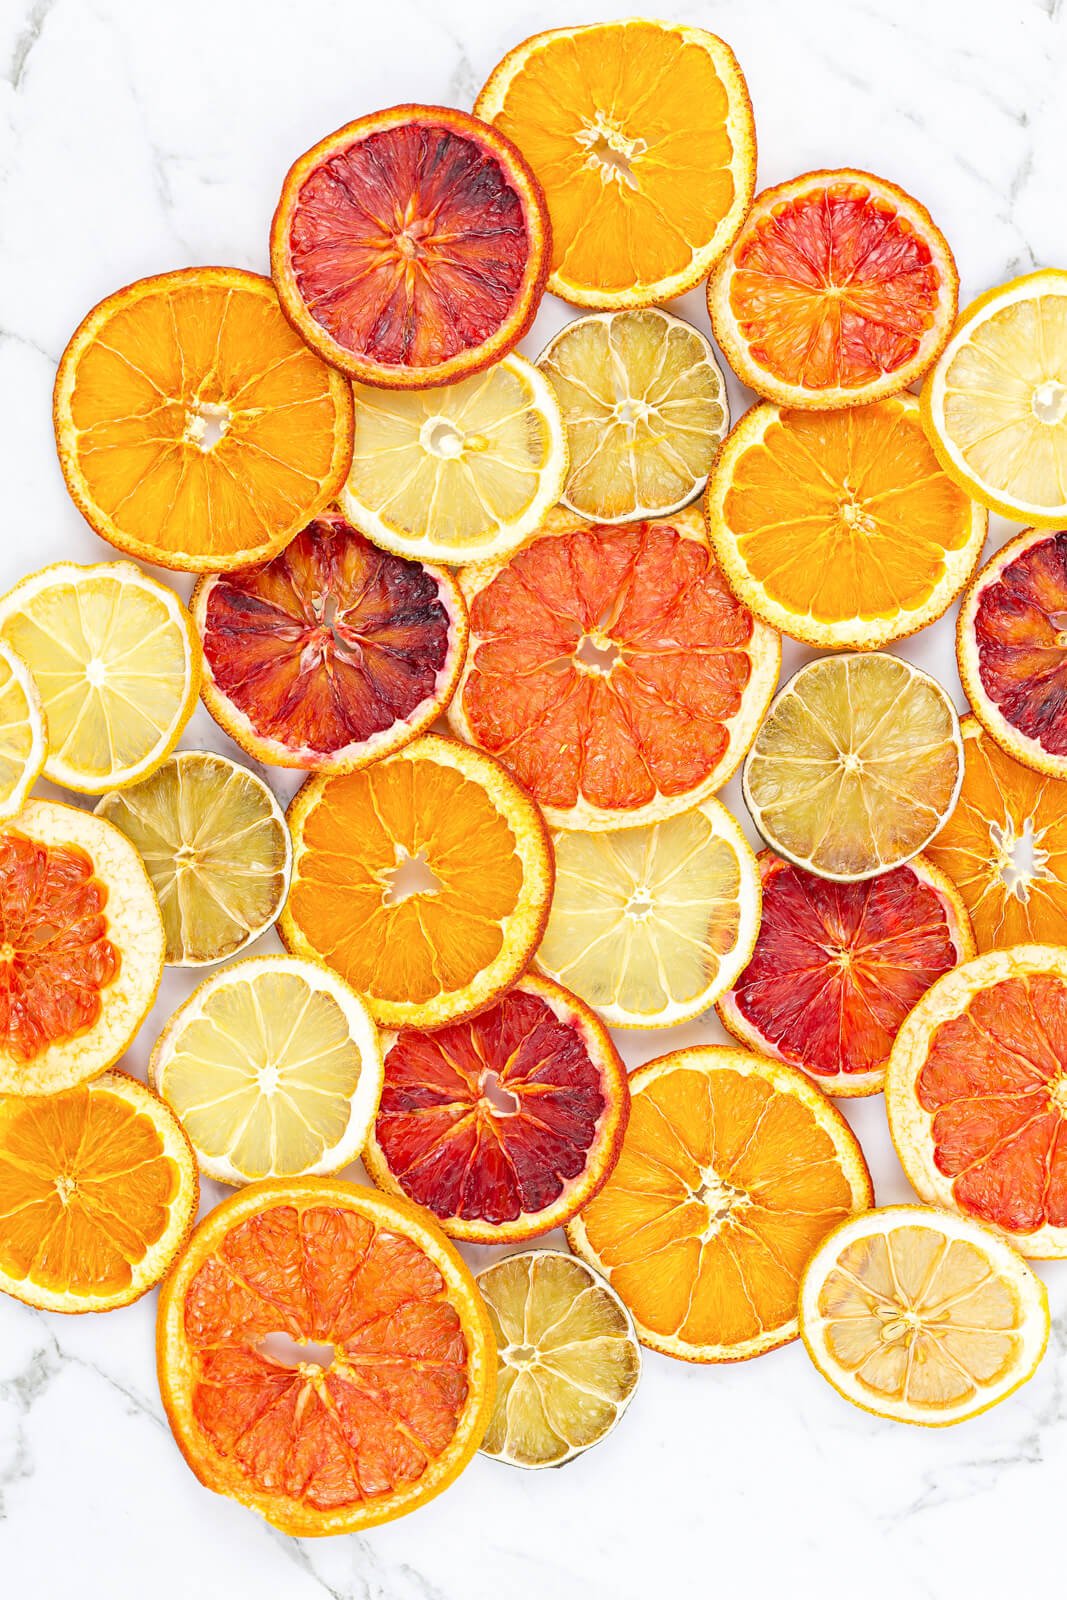 https://mindfulmocktail.com/wp-content/uploads/2022/03/dehydrated-citrus-recipe.jpg